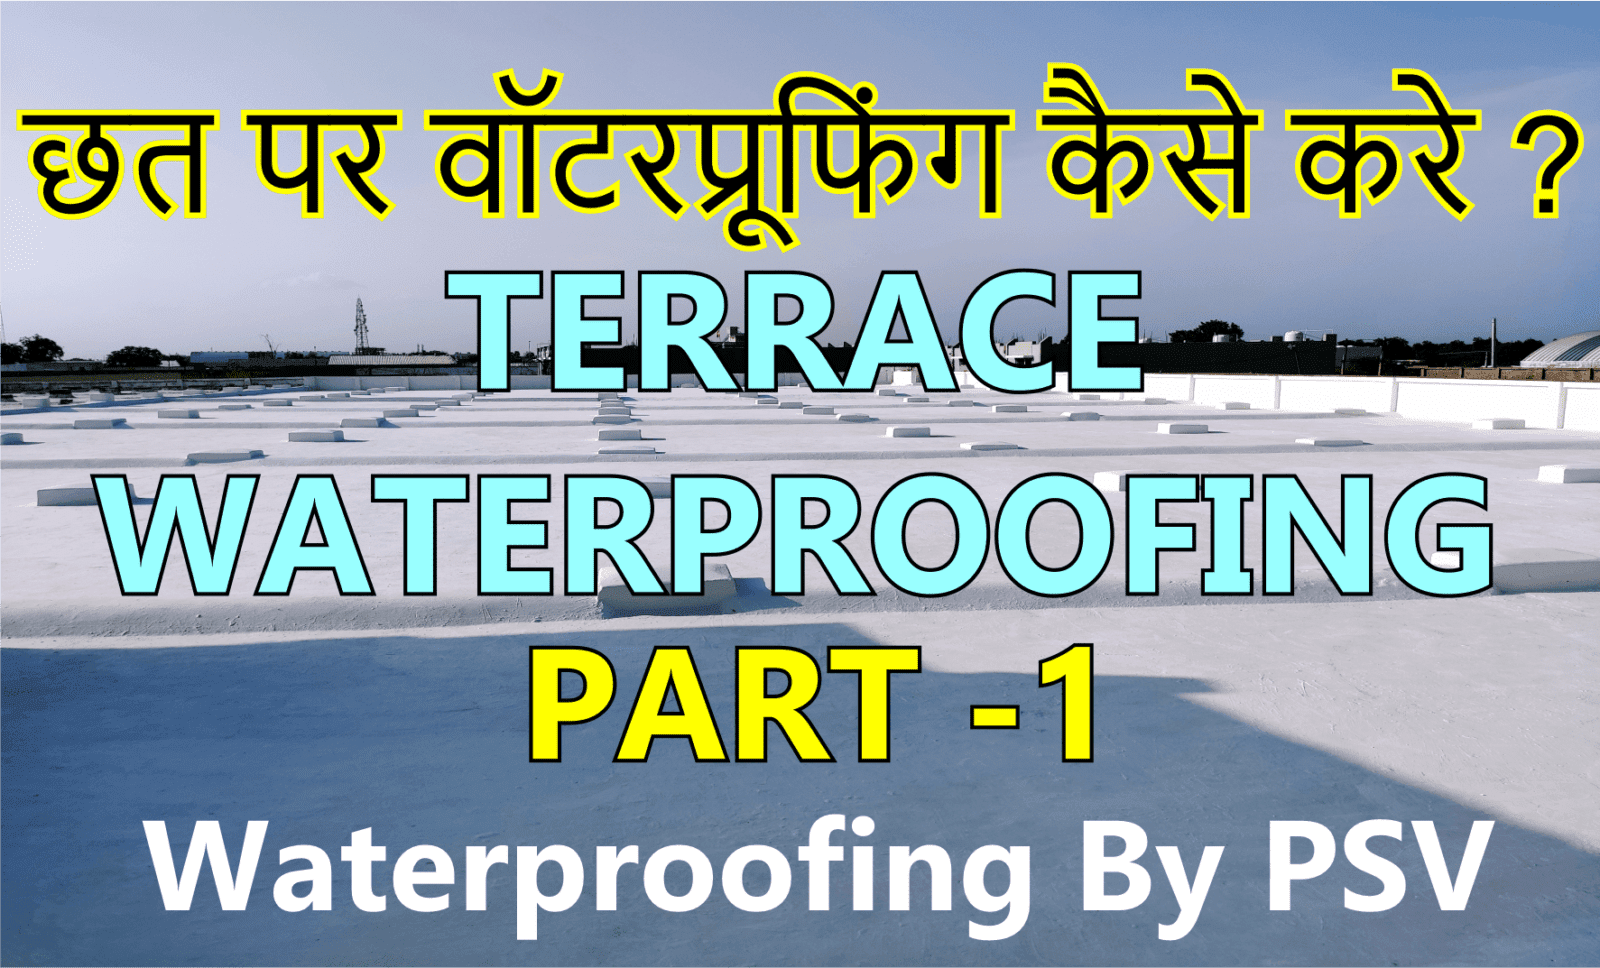 Terrace waterproofing Part-1